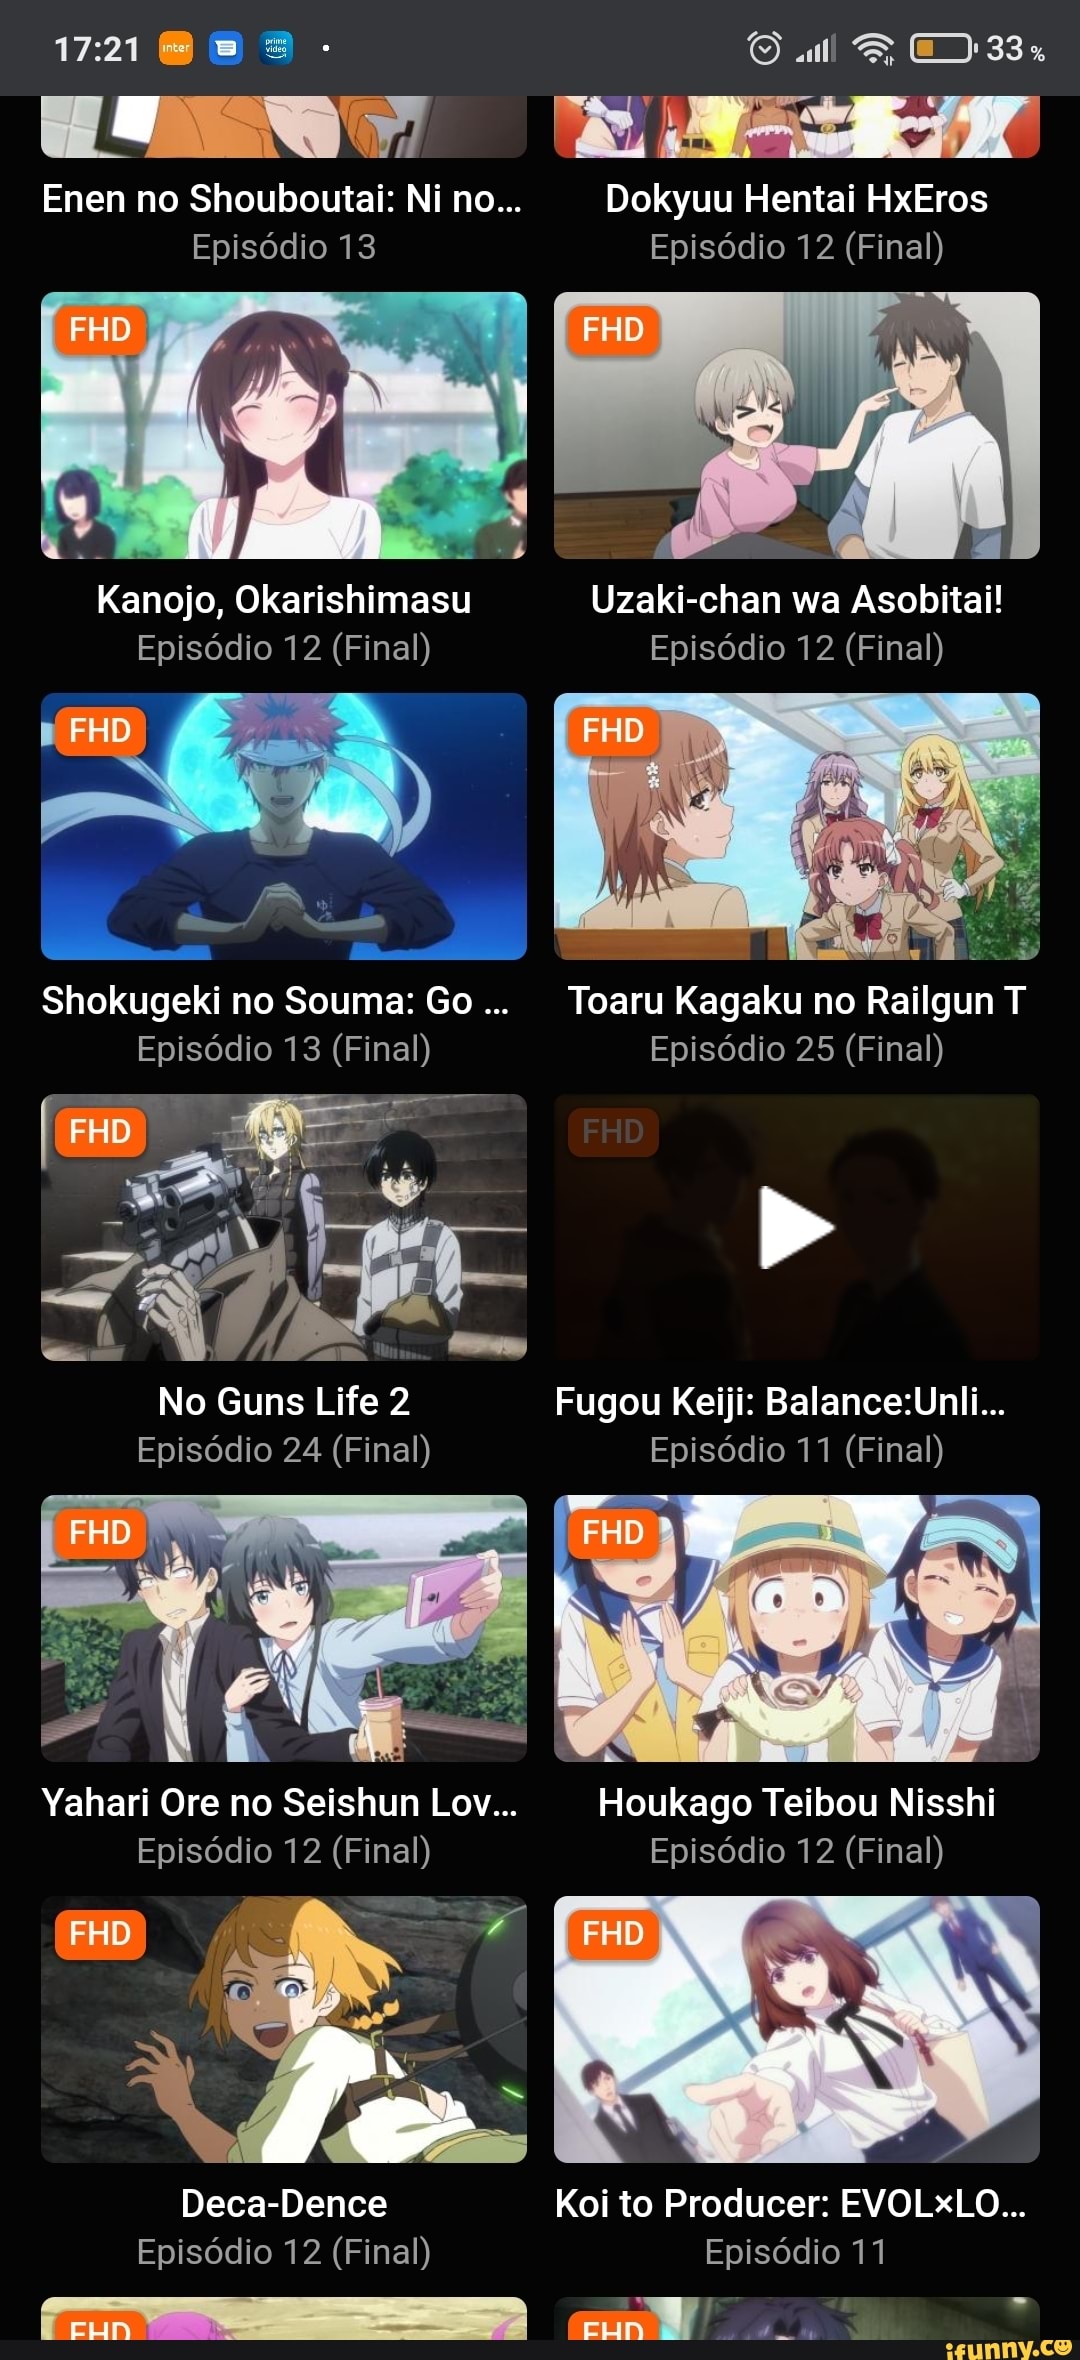 Assistir Kanojo, Okarishimasu Todos os Episódios Online - Animes BR